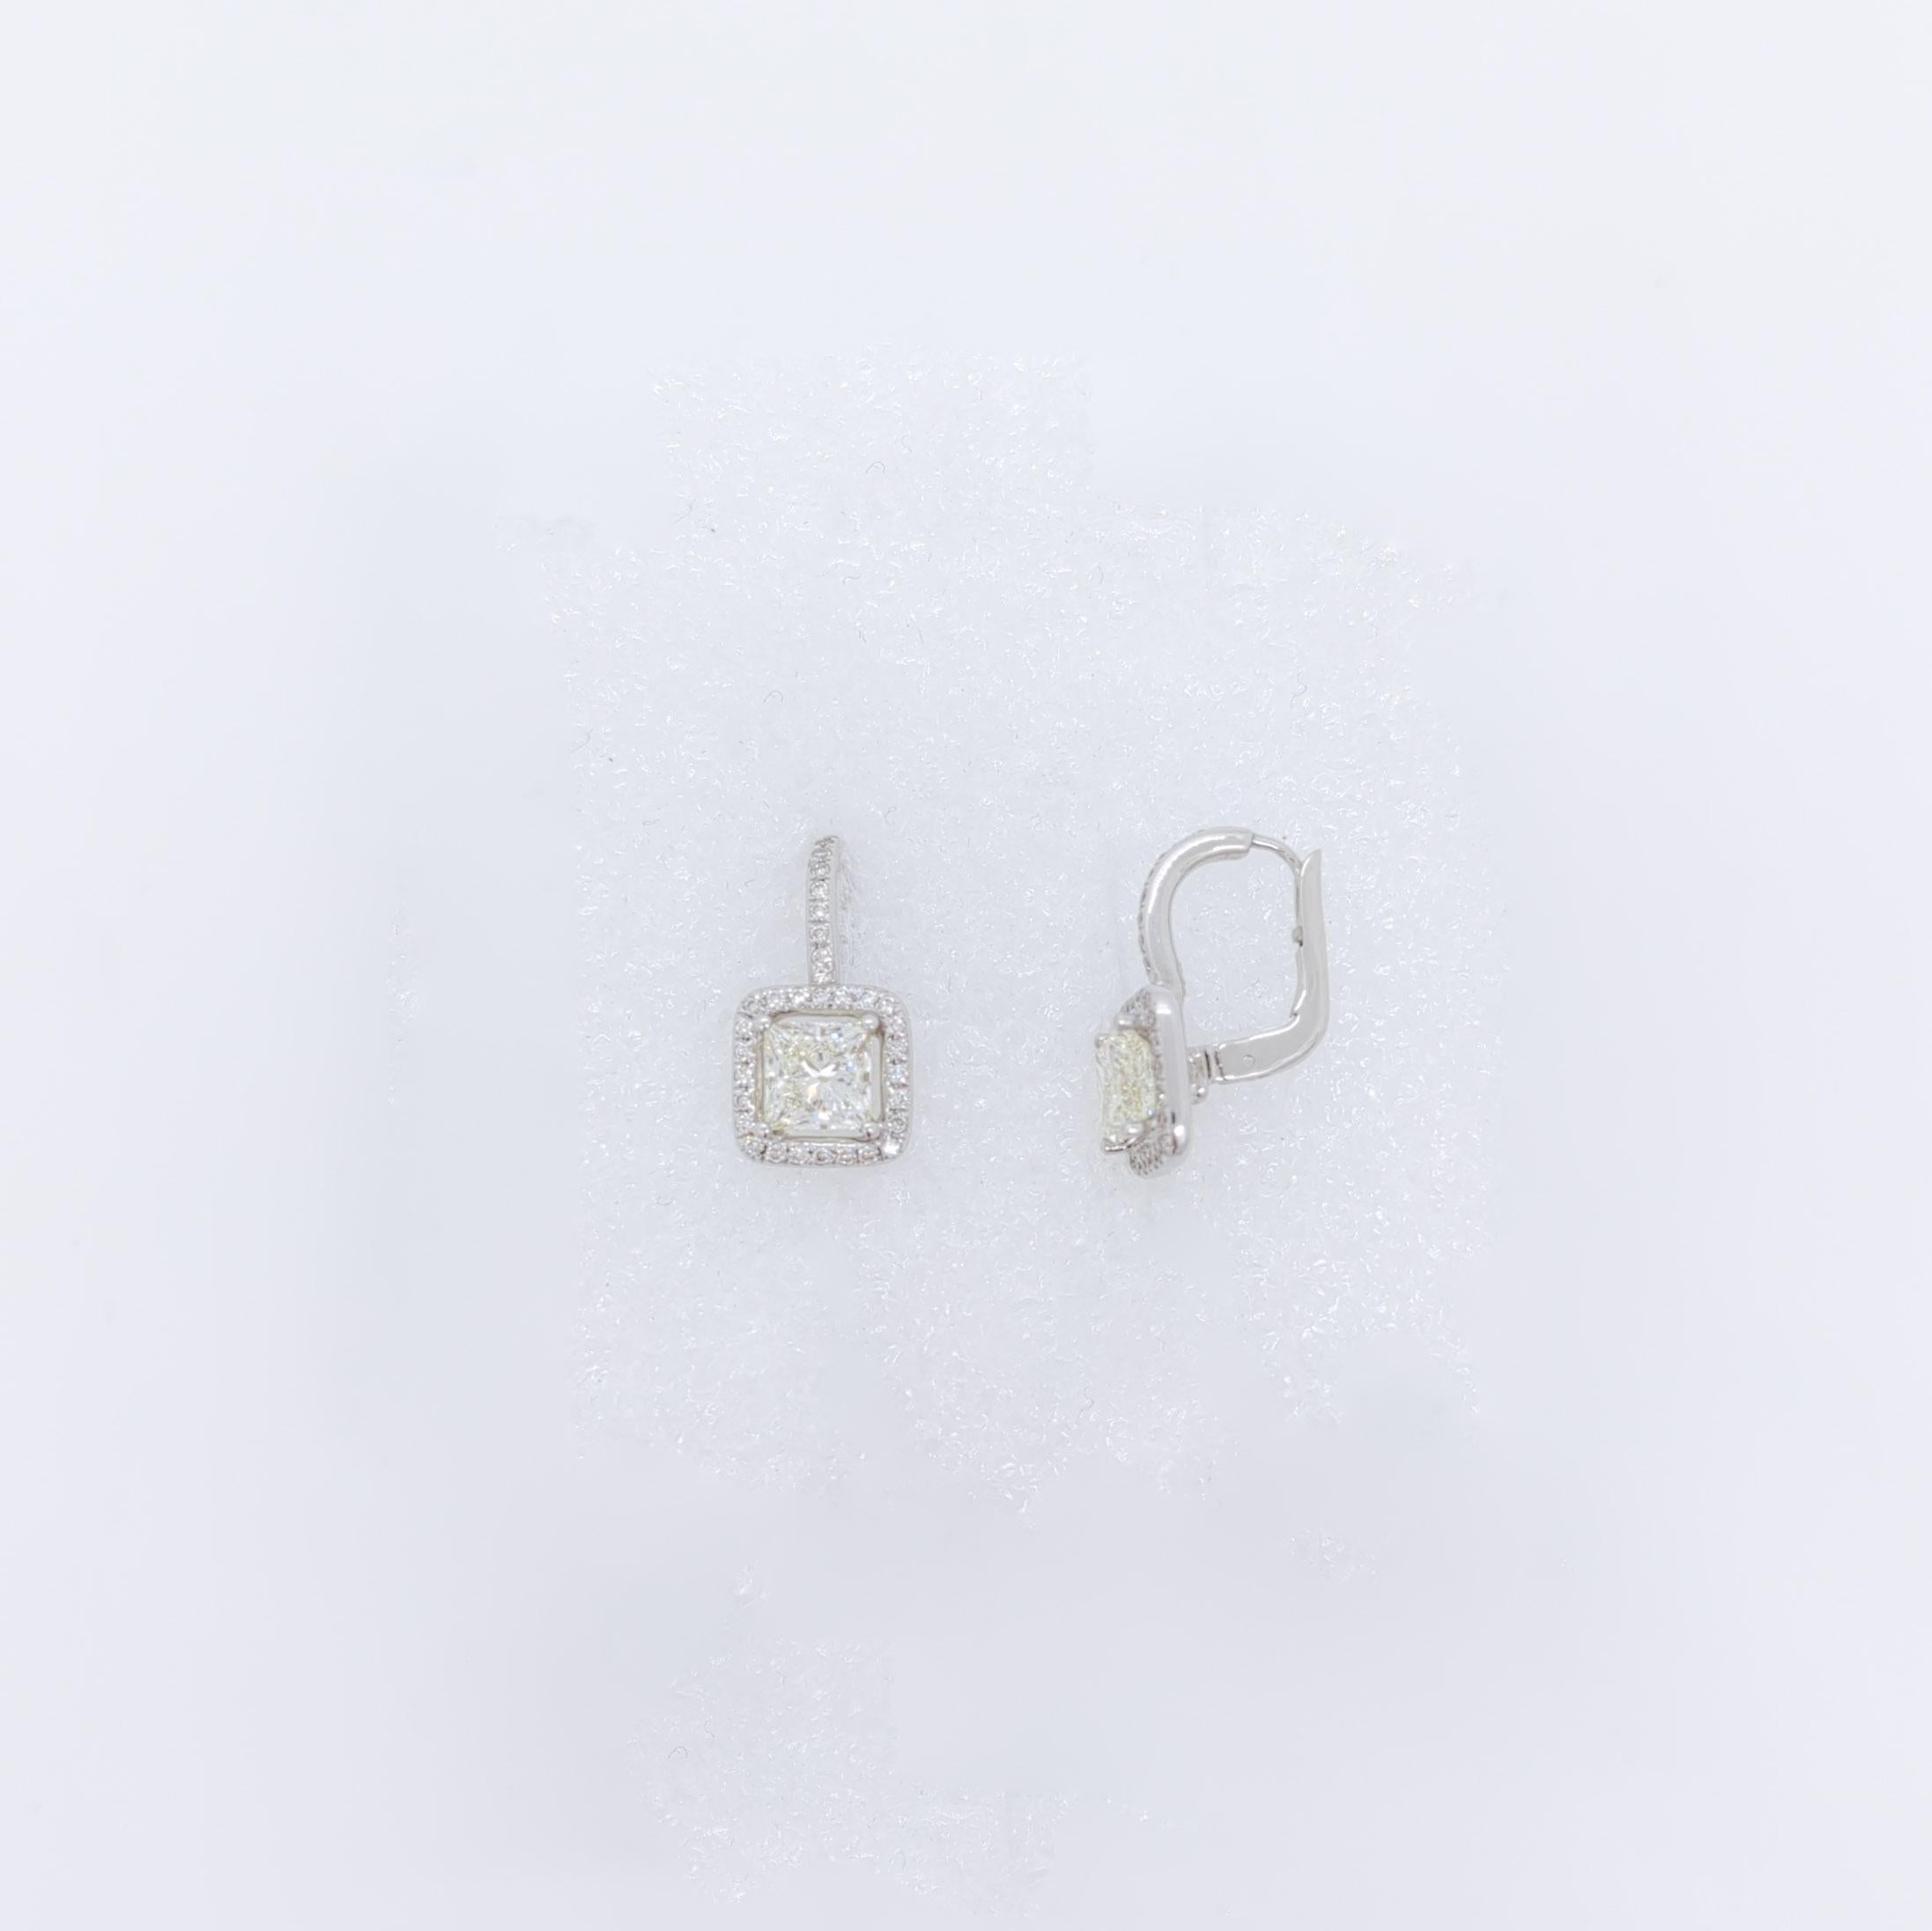  Two Stone Princess Cut Diamond Dangle Earrings in 18K White Gold For Sale 1